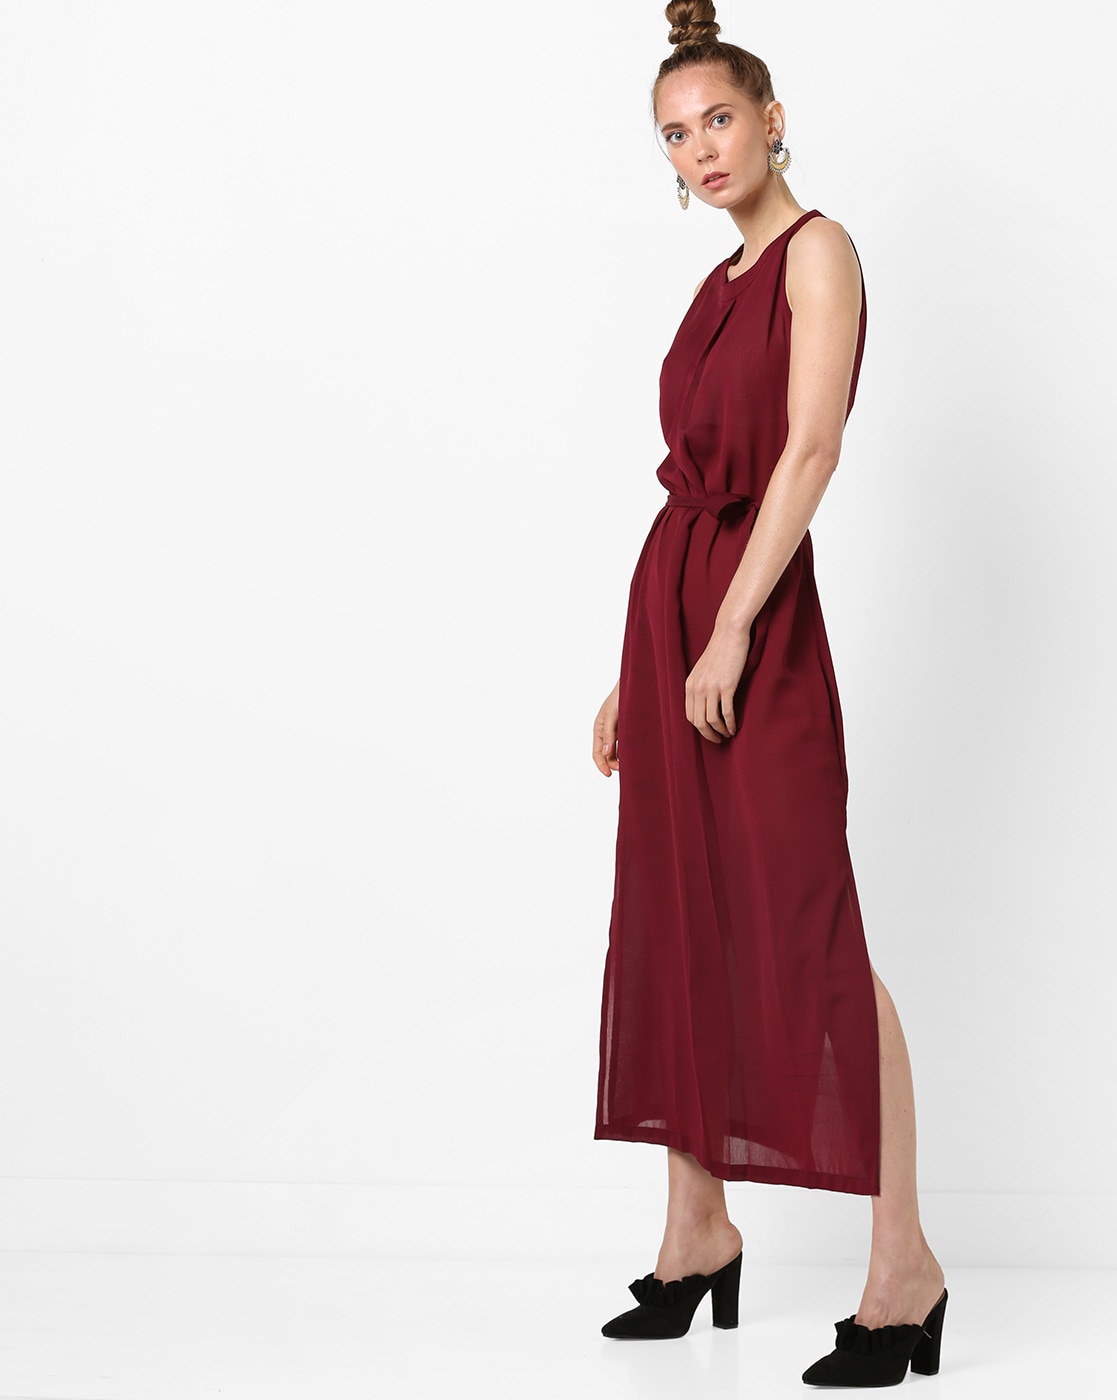 Buy Maroon Red Dresses for Women by Femella Online | Ajio.com